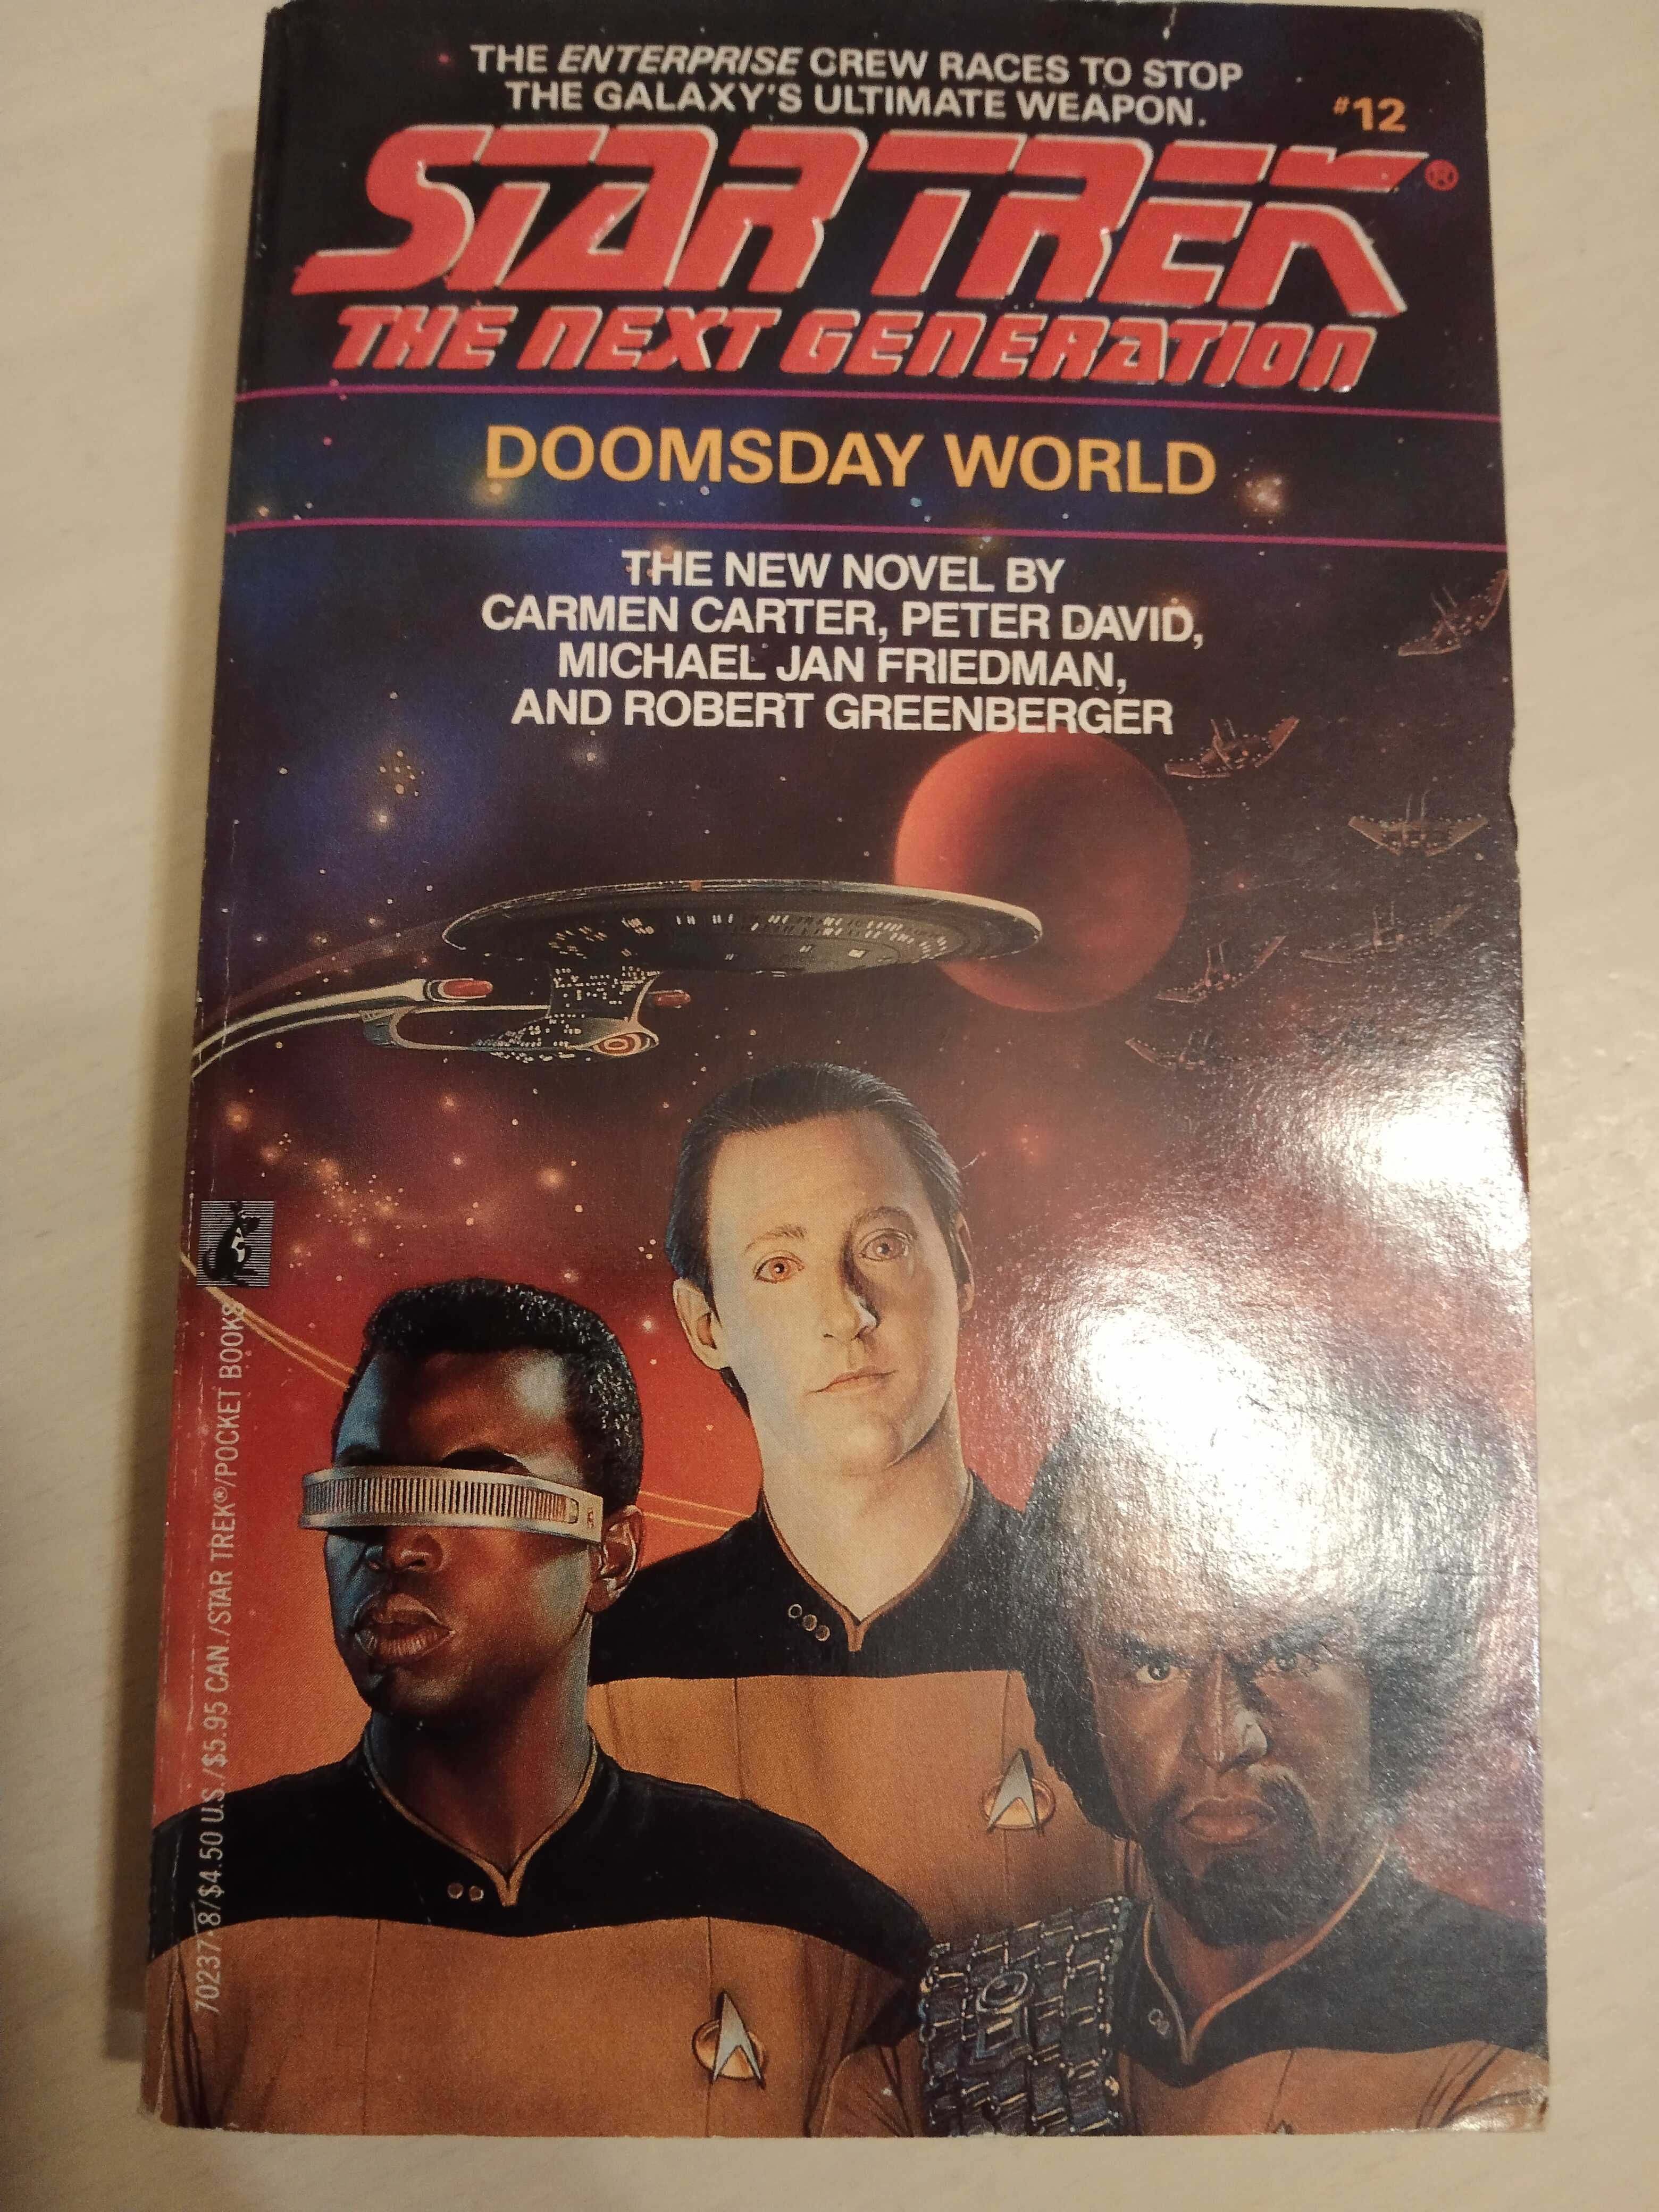 Star Trek The next generation Doomsday World książka angielski